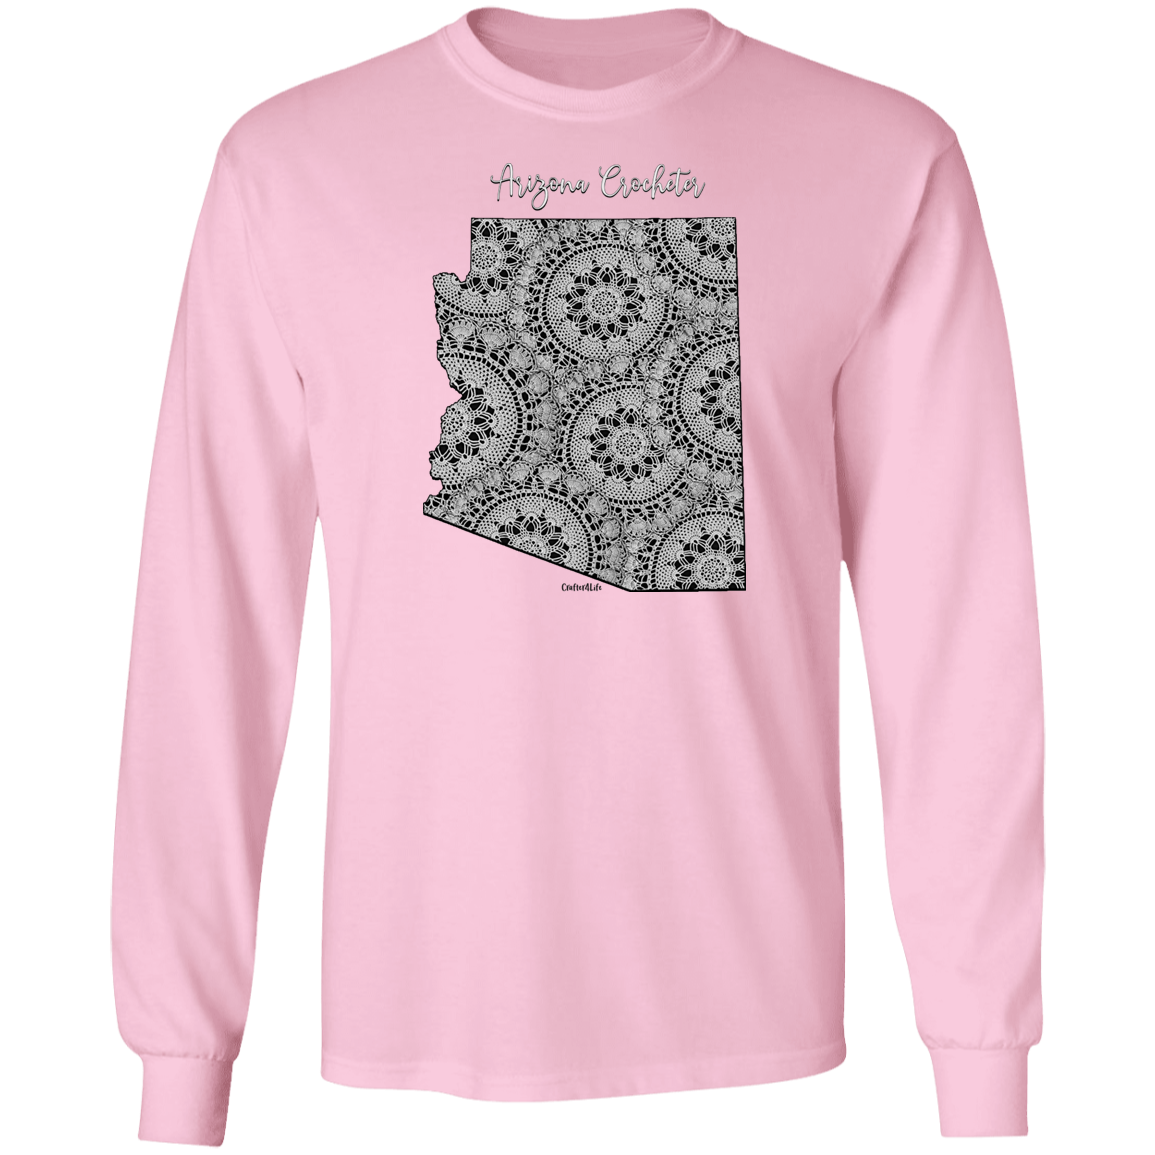 Arizona Crocheter LS Ultra Cotton T-Shirt